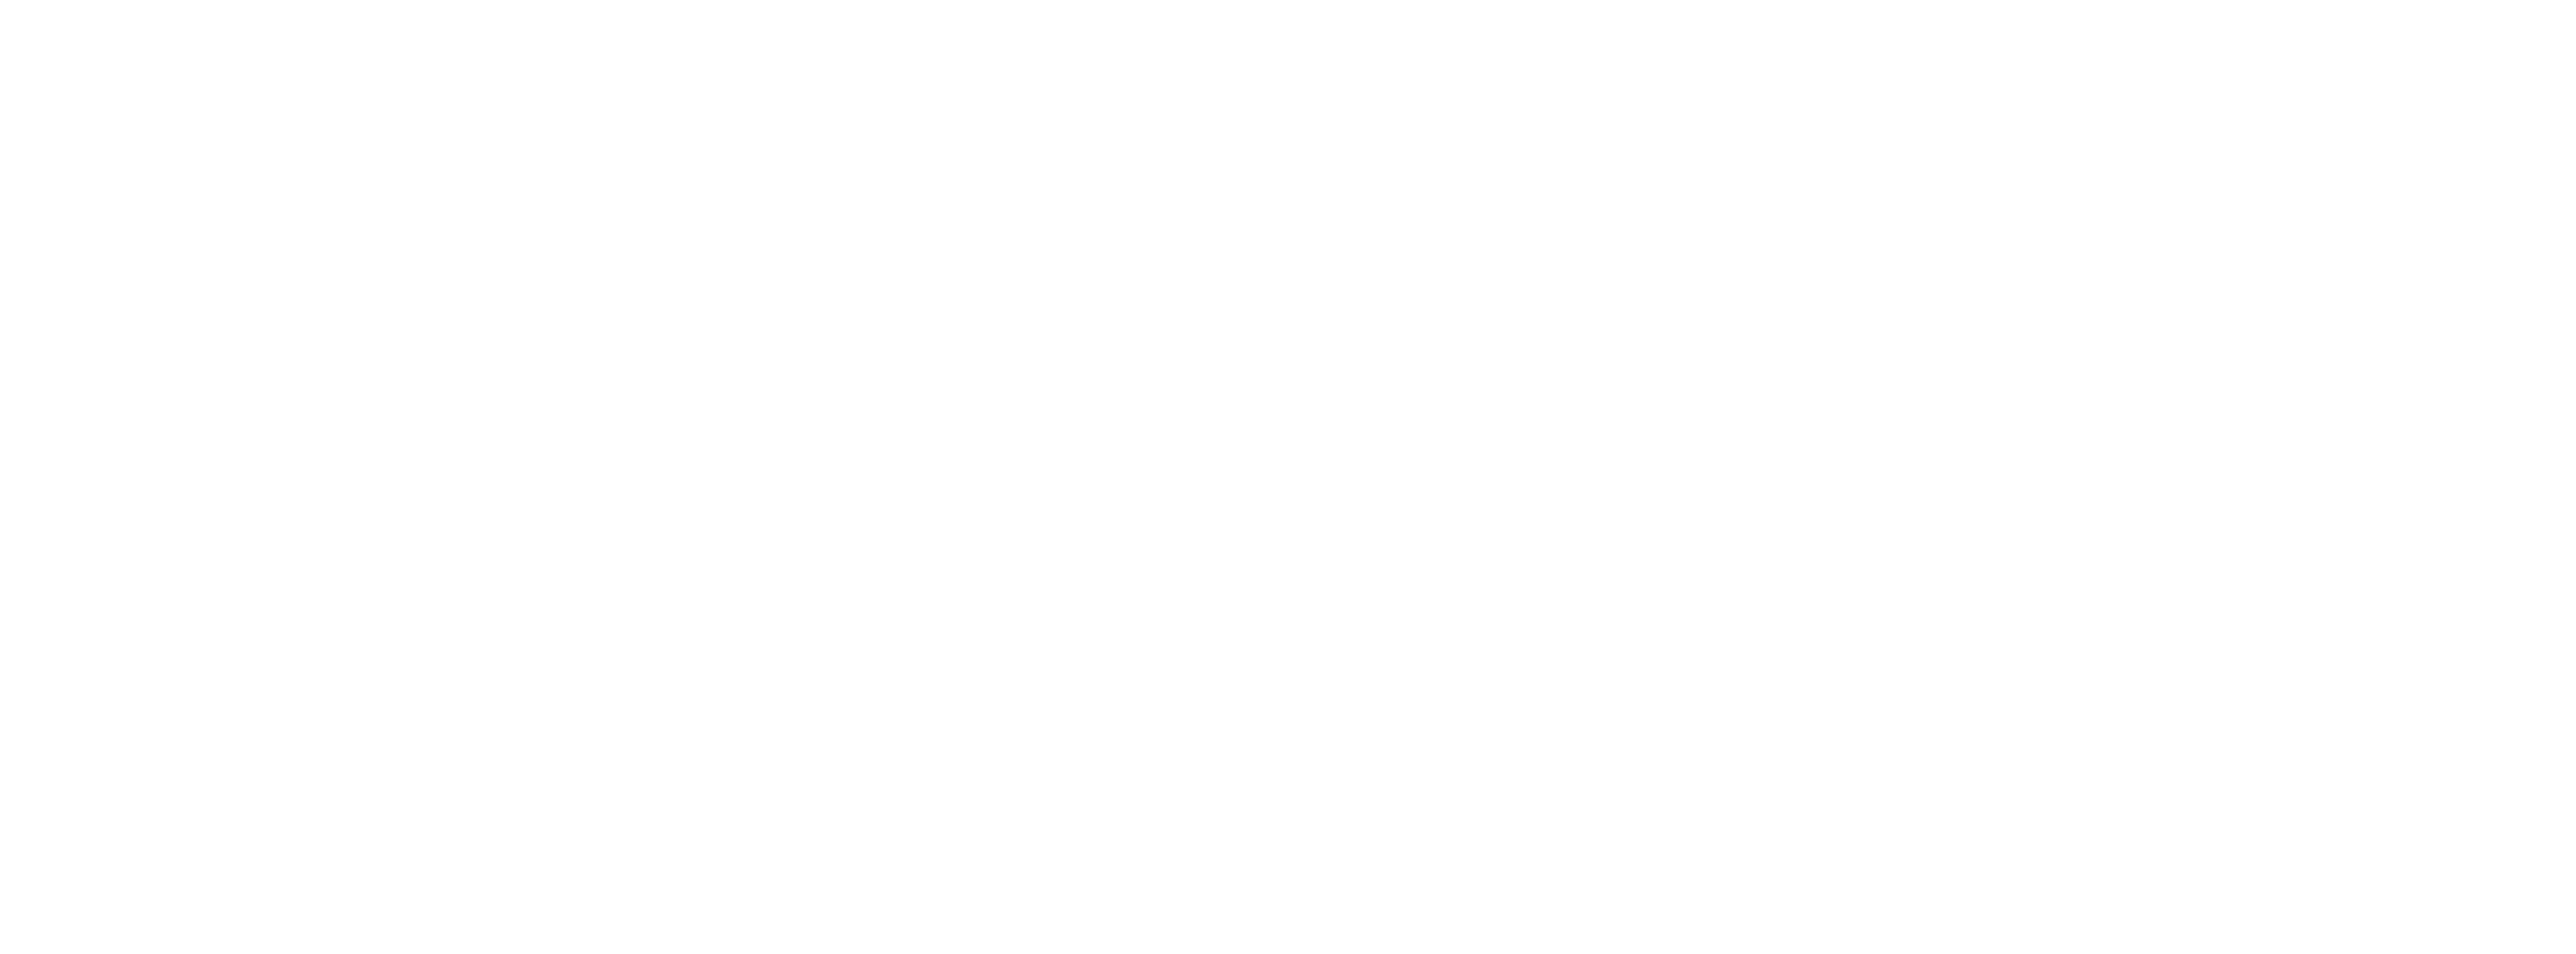 Mr.Head stamp